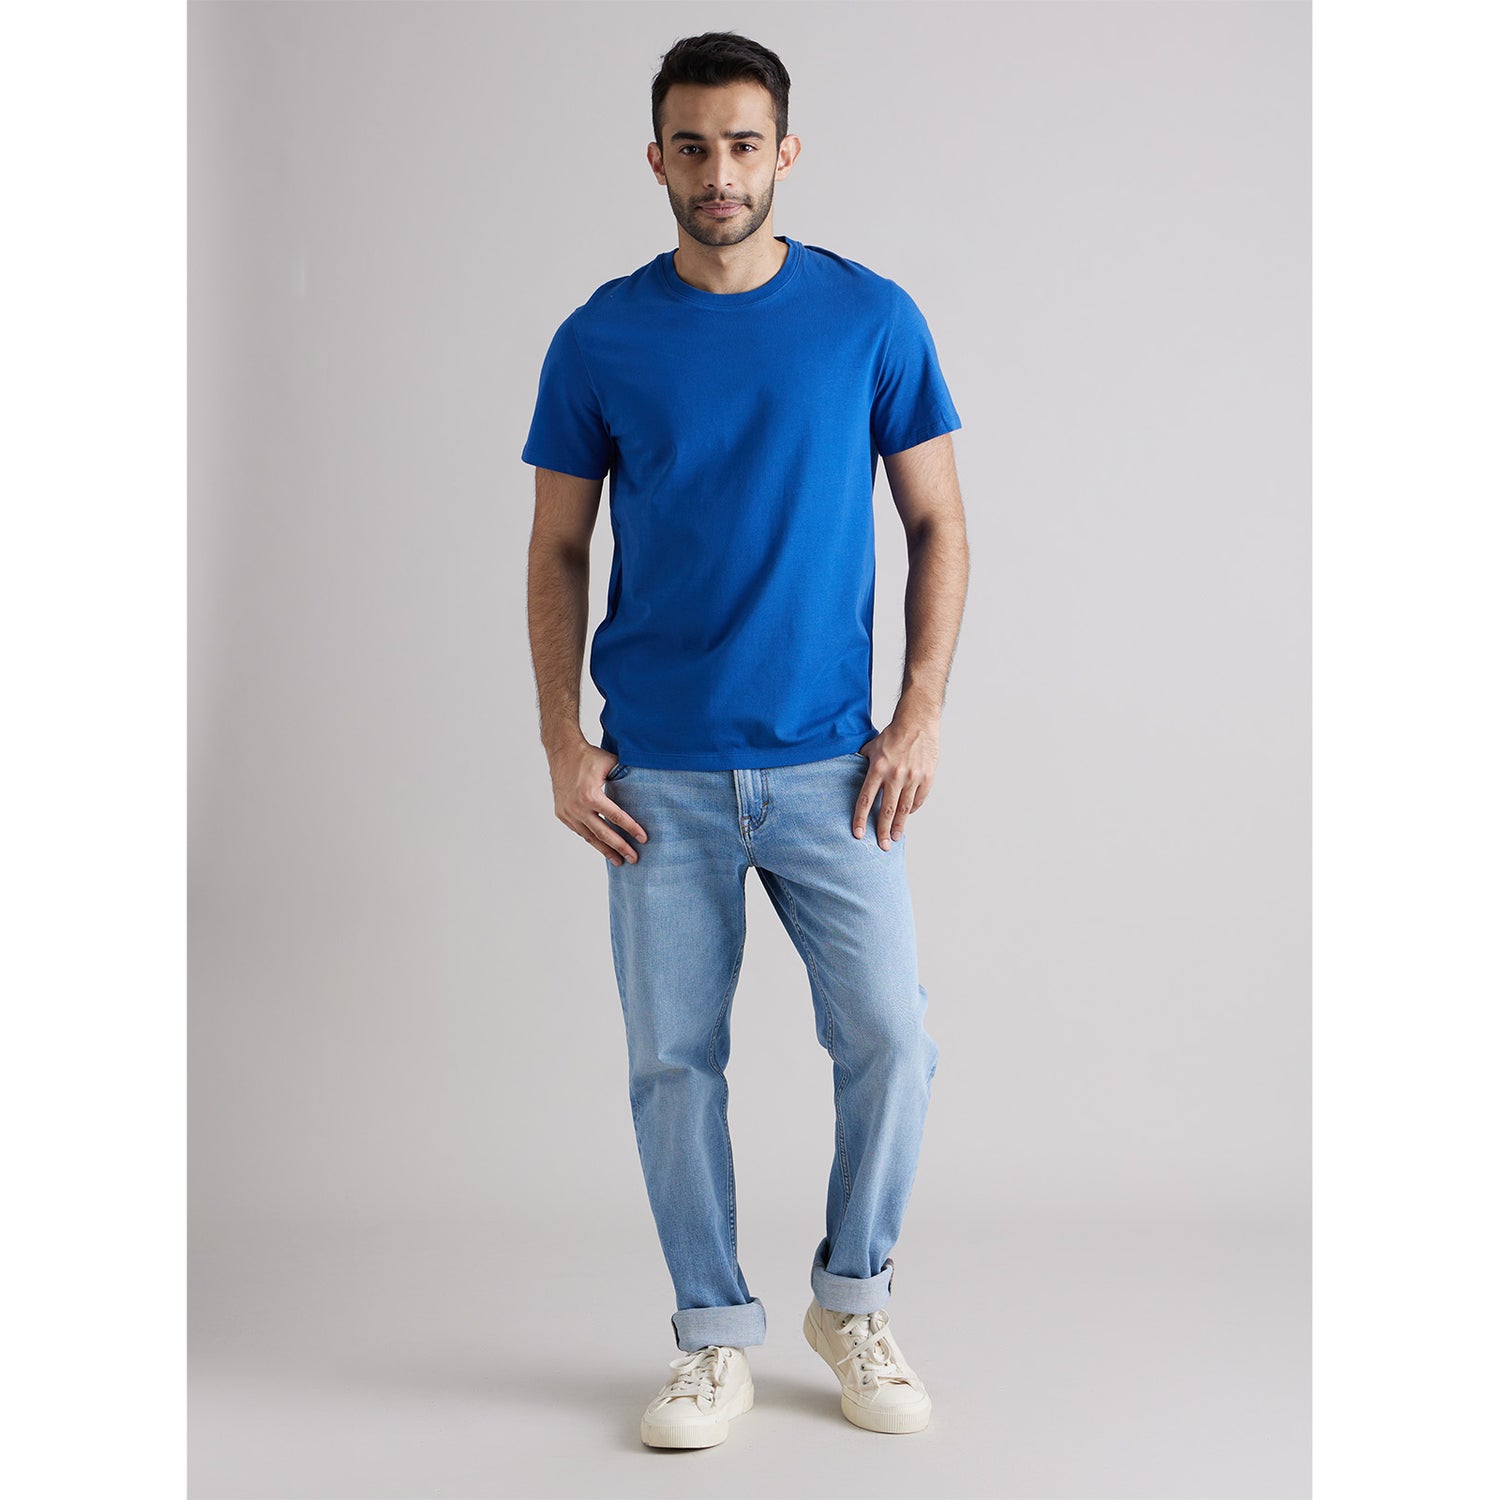 Blue Round Neck Cotton T-shirt (TEBASE)